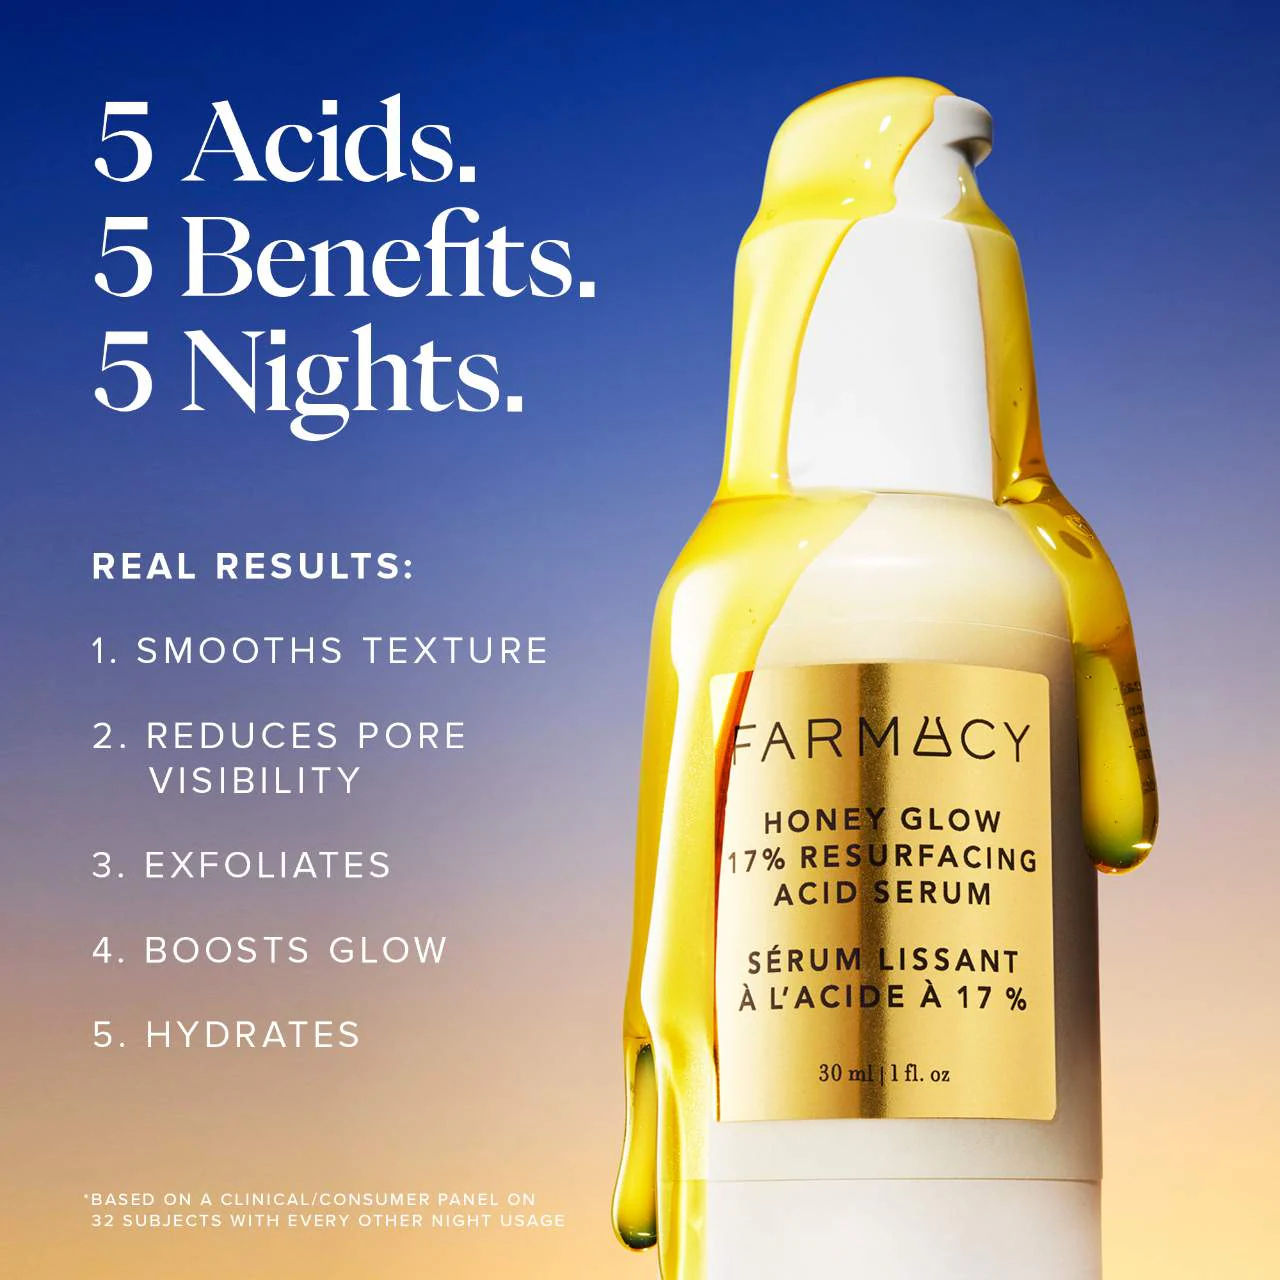 Farmacy Beauty Honey Glow 17% Resurfacing Acid Serum